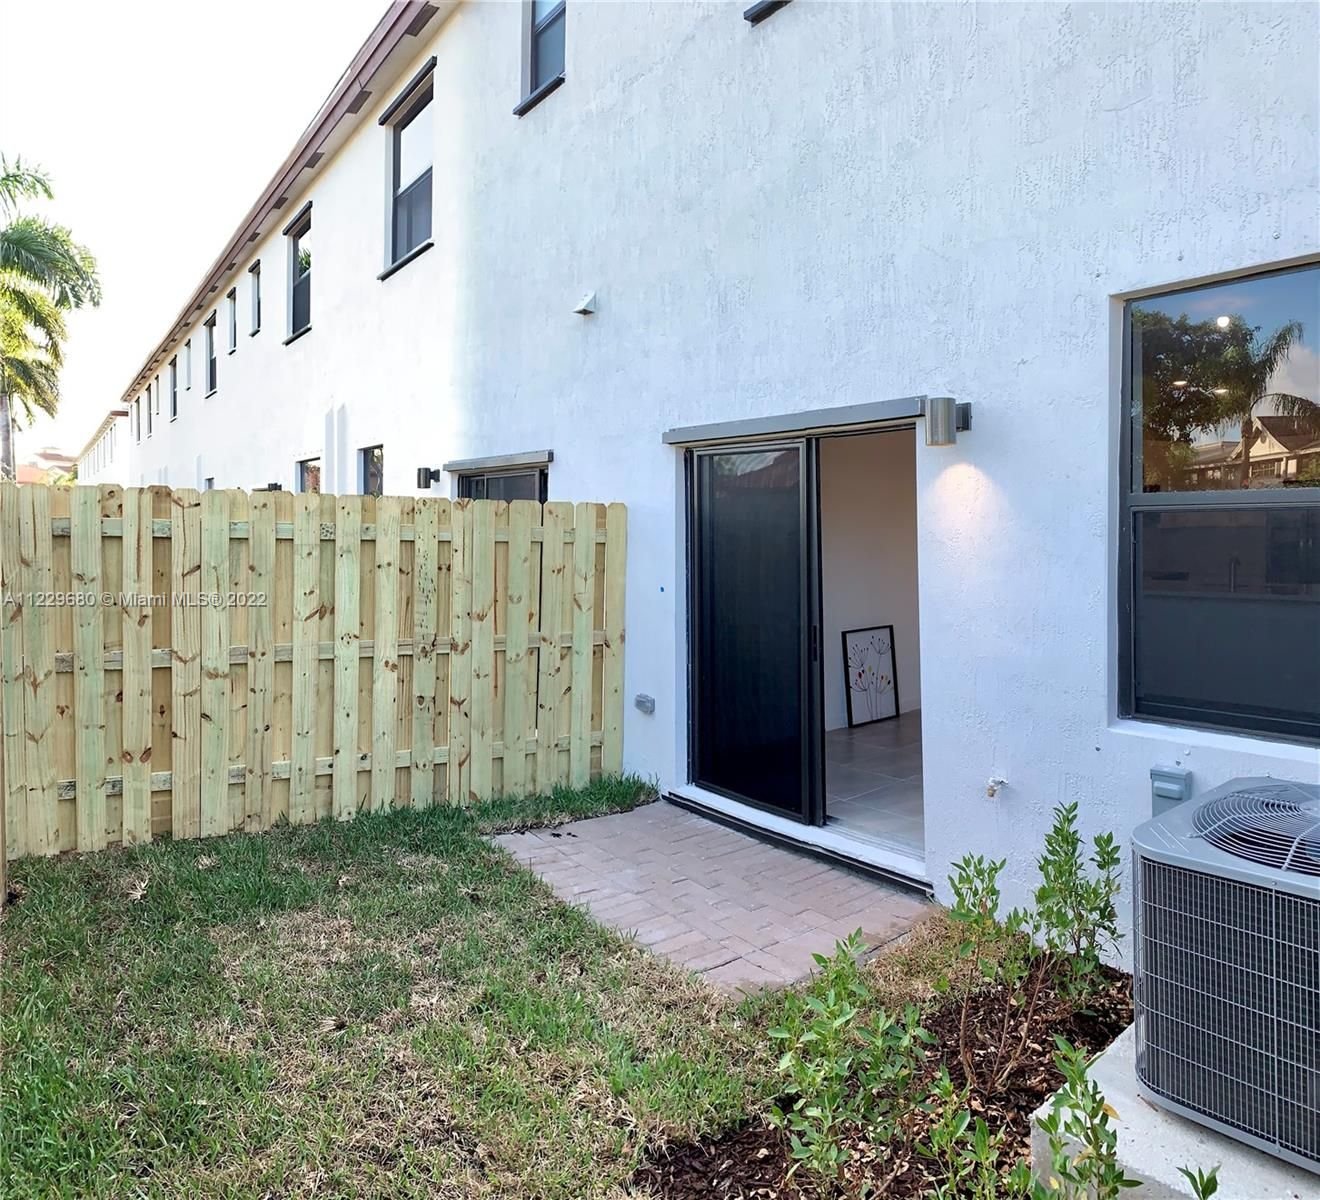 Real estate property located at 412 208th Ter #412, Miami-Dade County, Miami, FL